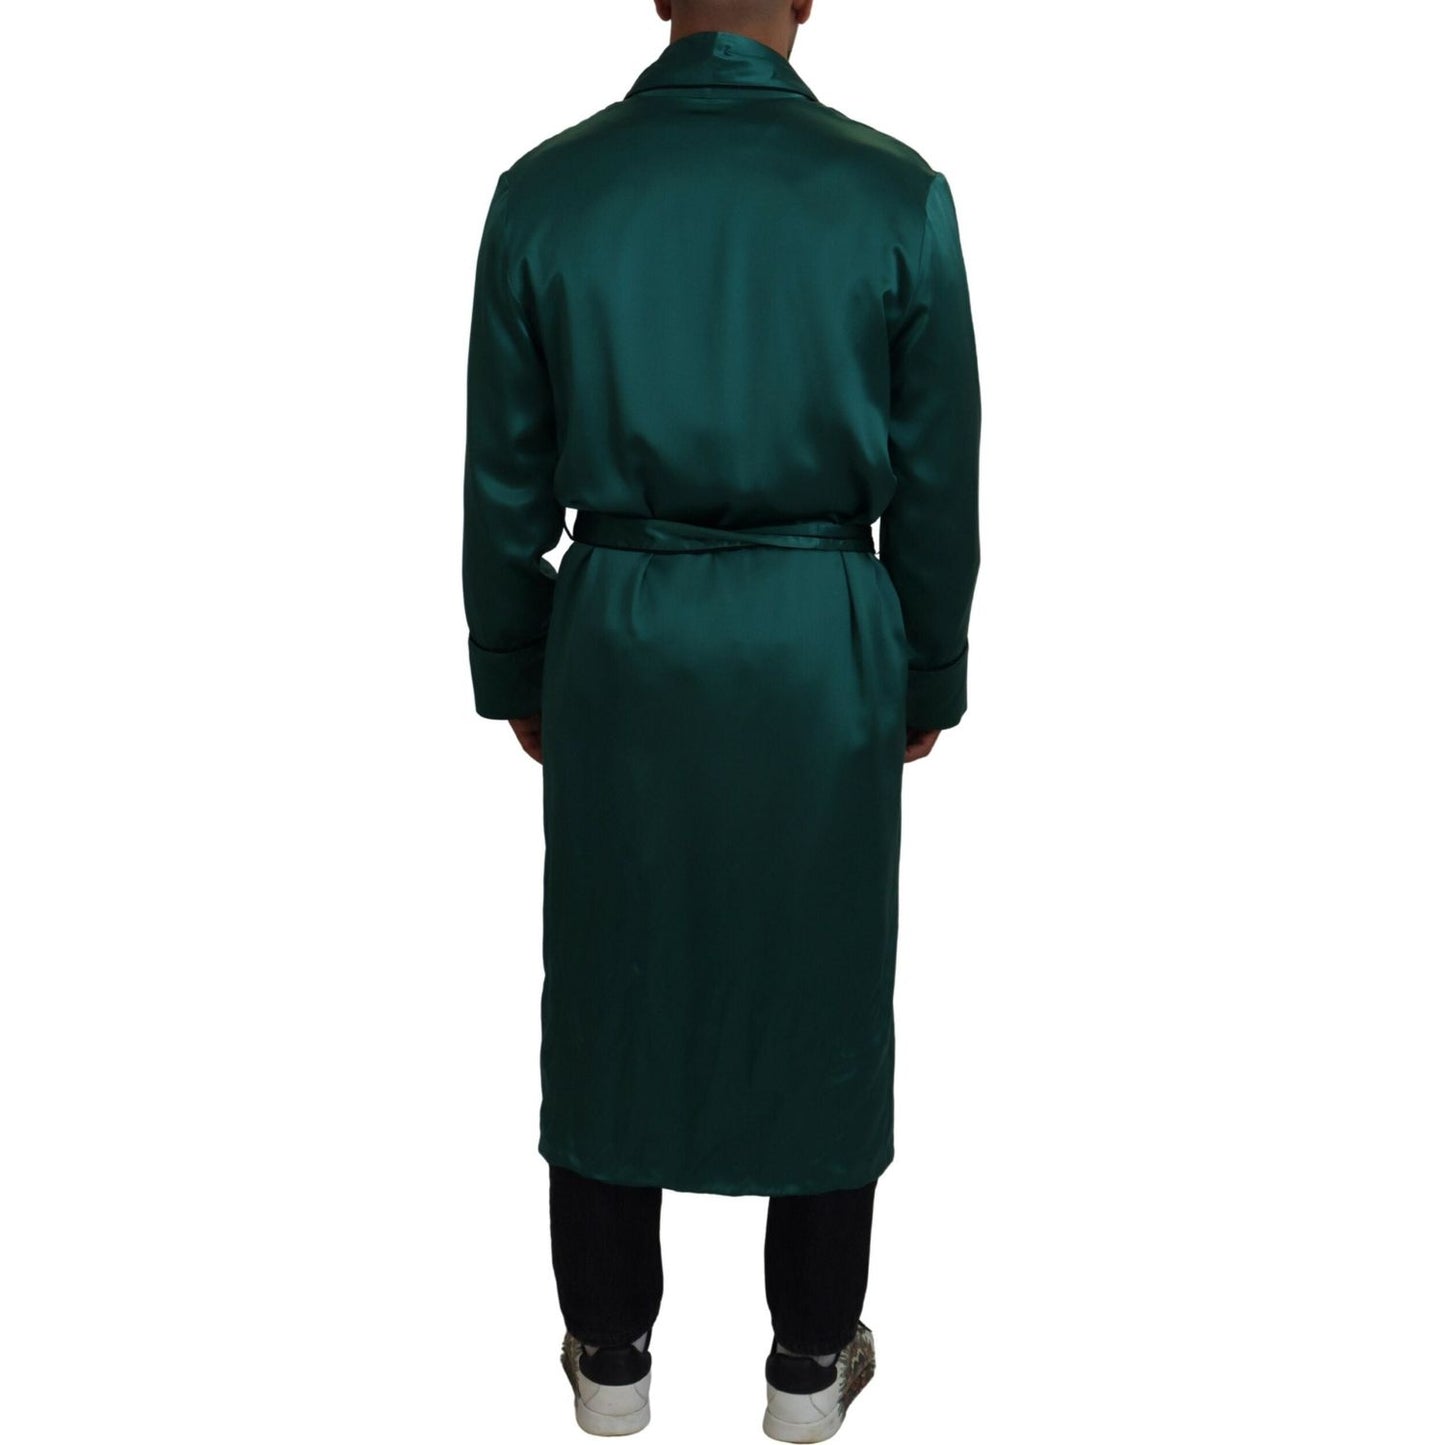 Dolce & Gabbana Elegant Silk Robe in Lush Green green-silk-waist-belt-robe-sleepwear IMG_4009-scaled-1ffe2f60-9f3.jpg